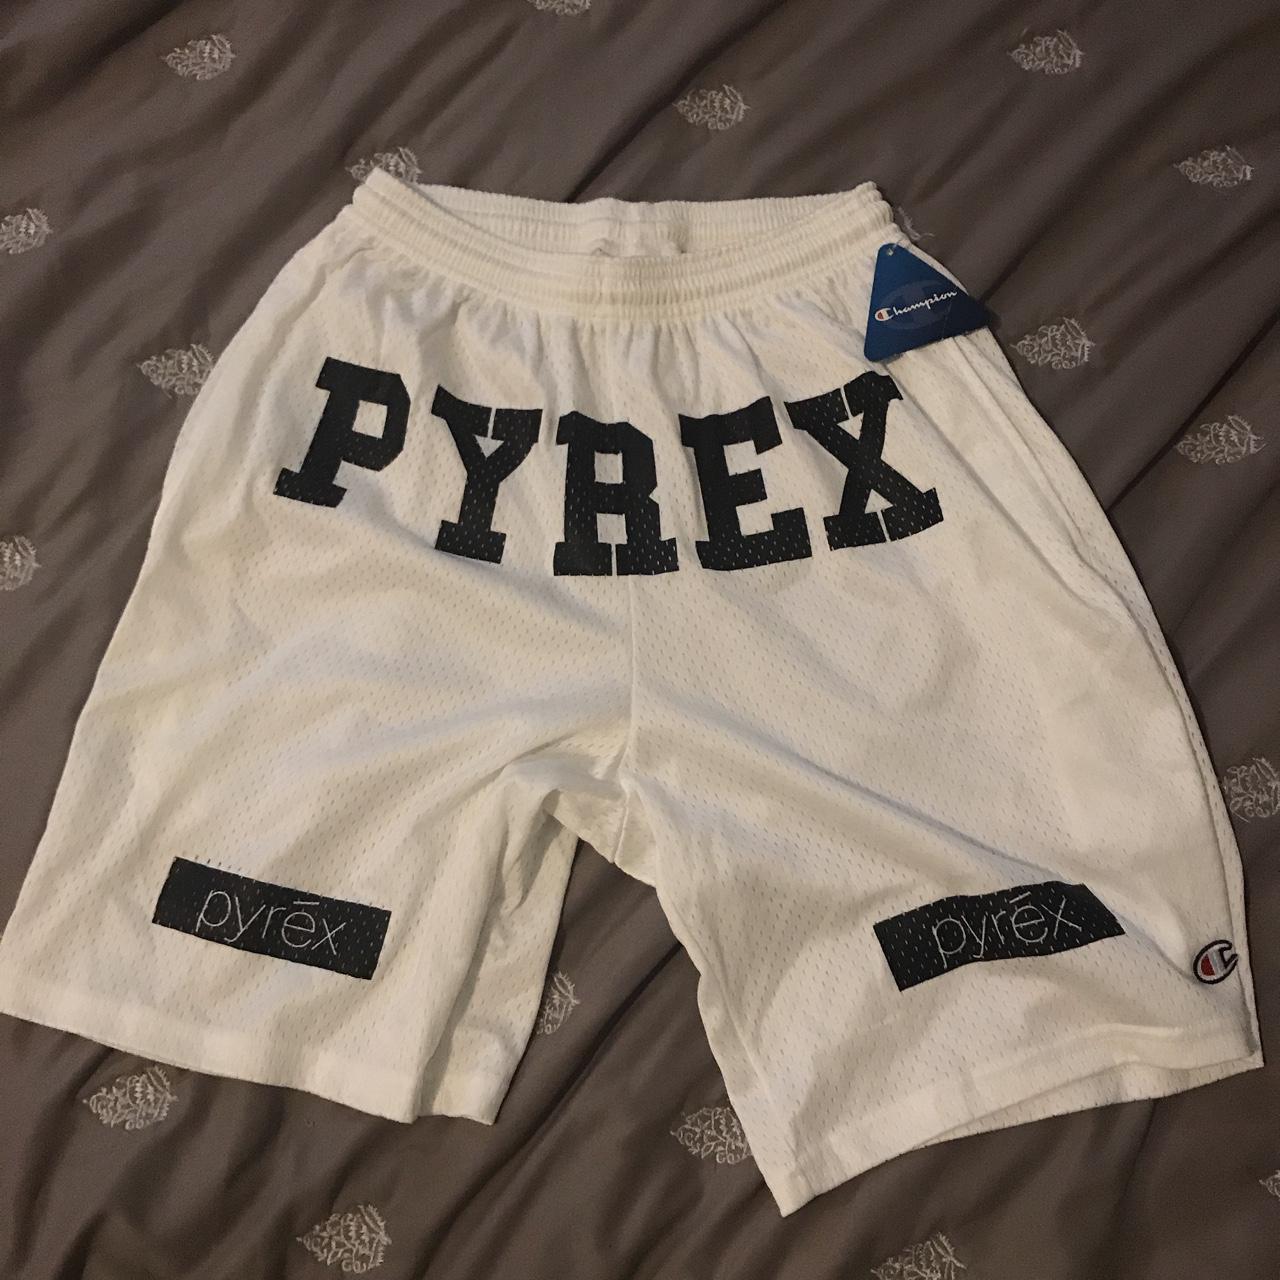 Pyrex Vision Basketball shorts by Virgil Abloh...